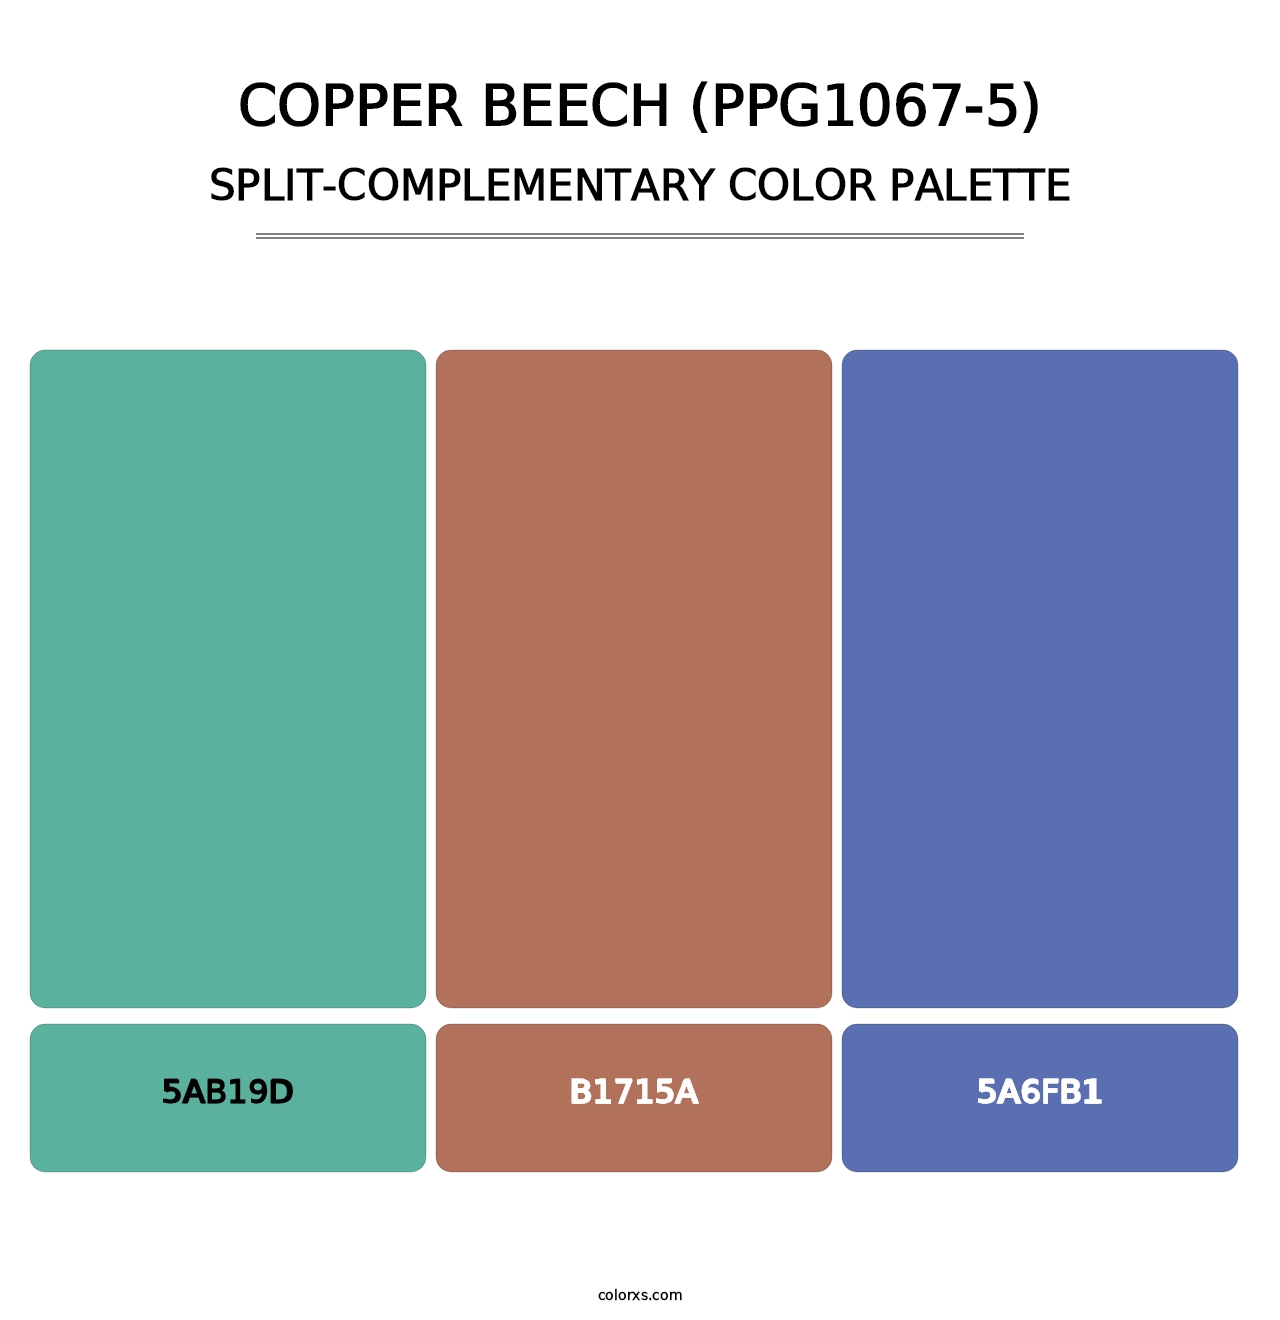 Copper Beech (PPG1067-5) - Split-Complementary Color Palette